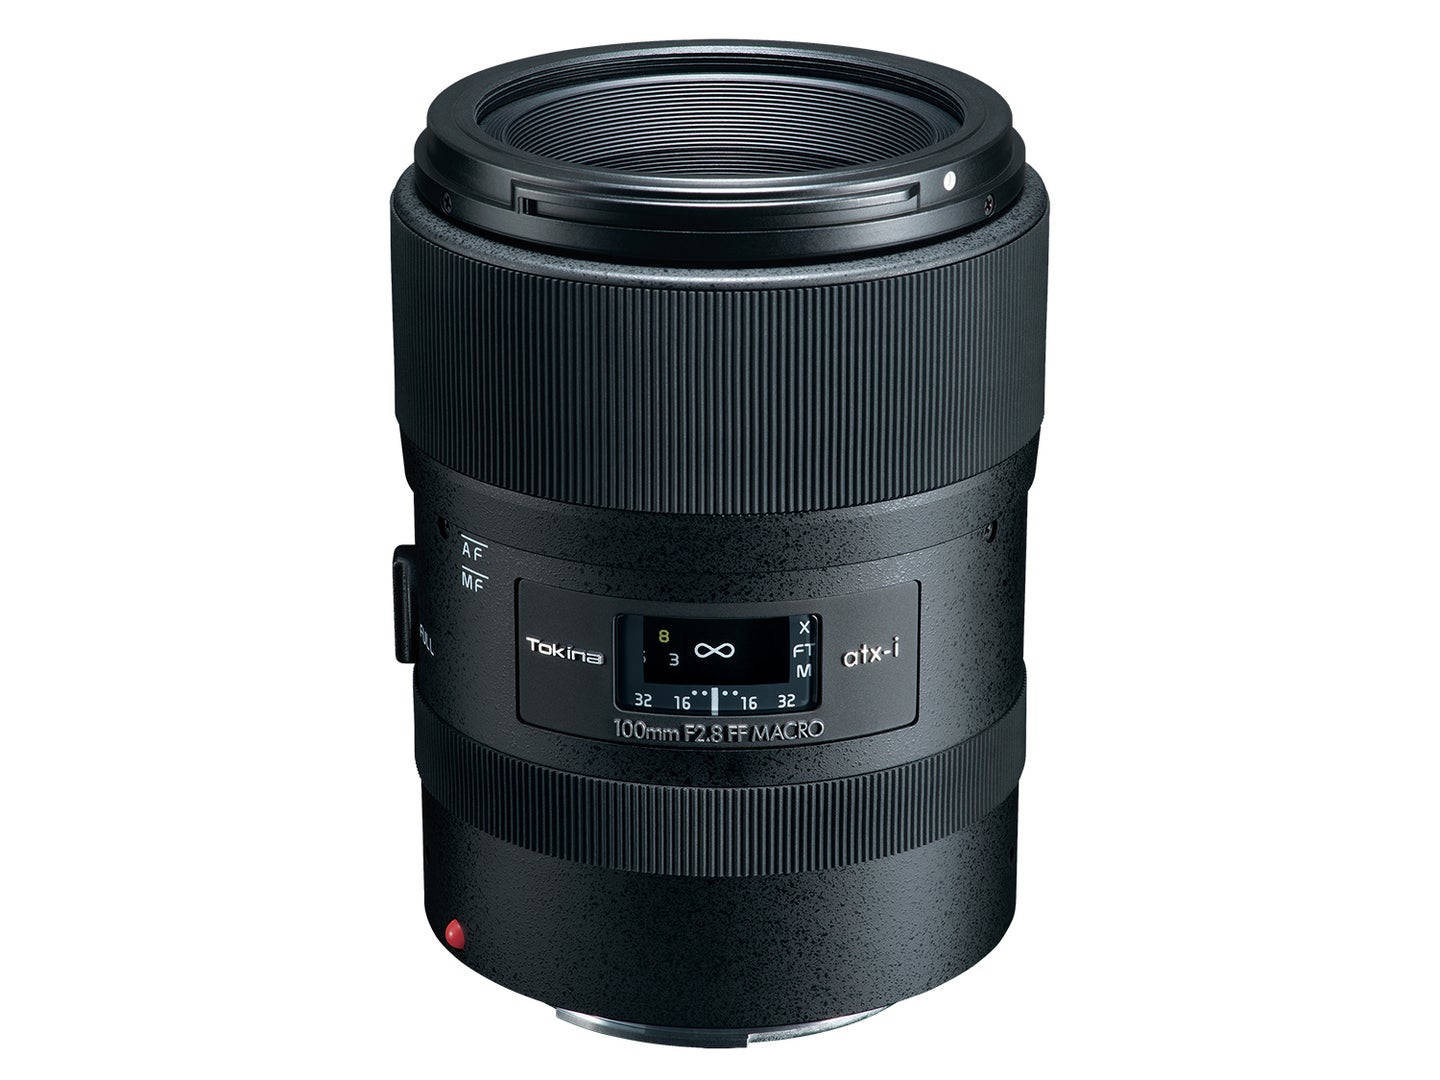 Tokina ATX-i 100mm F2.8 1:1 Macro lens for Canon and Nikon full-frame cameras